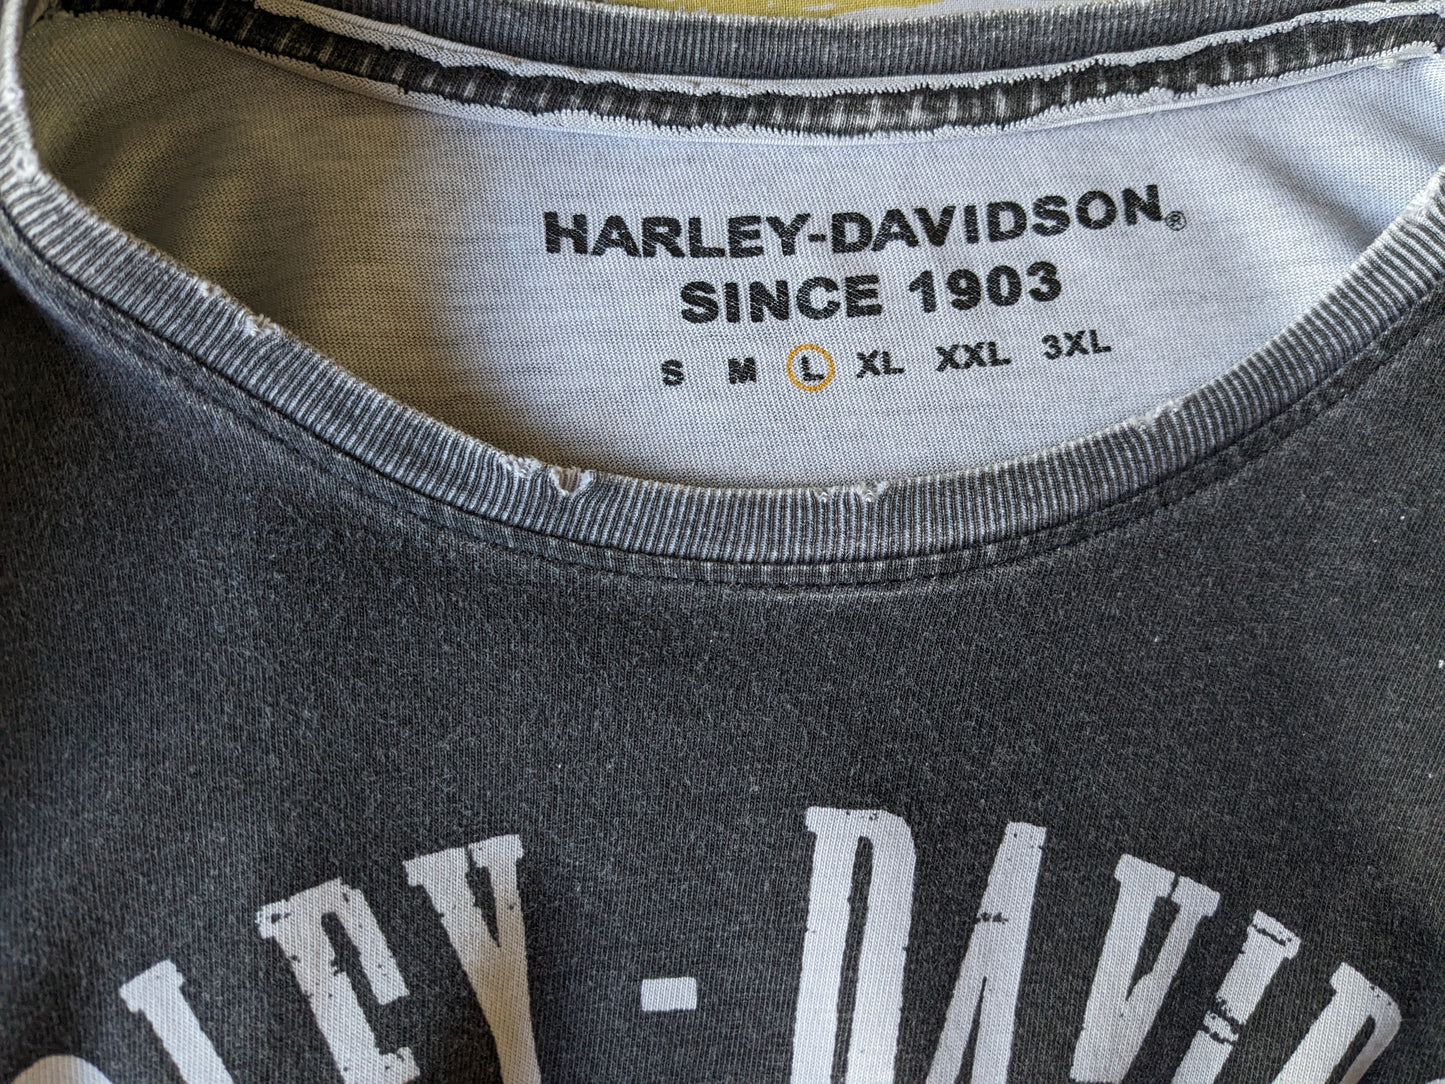 Harley Davidson Longsleeve. Color blanco gris. Talla L.